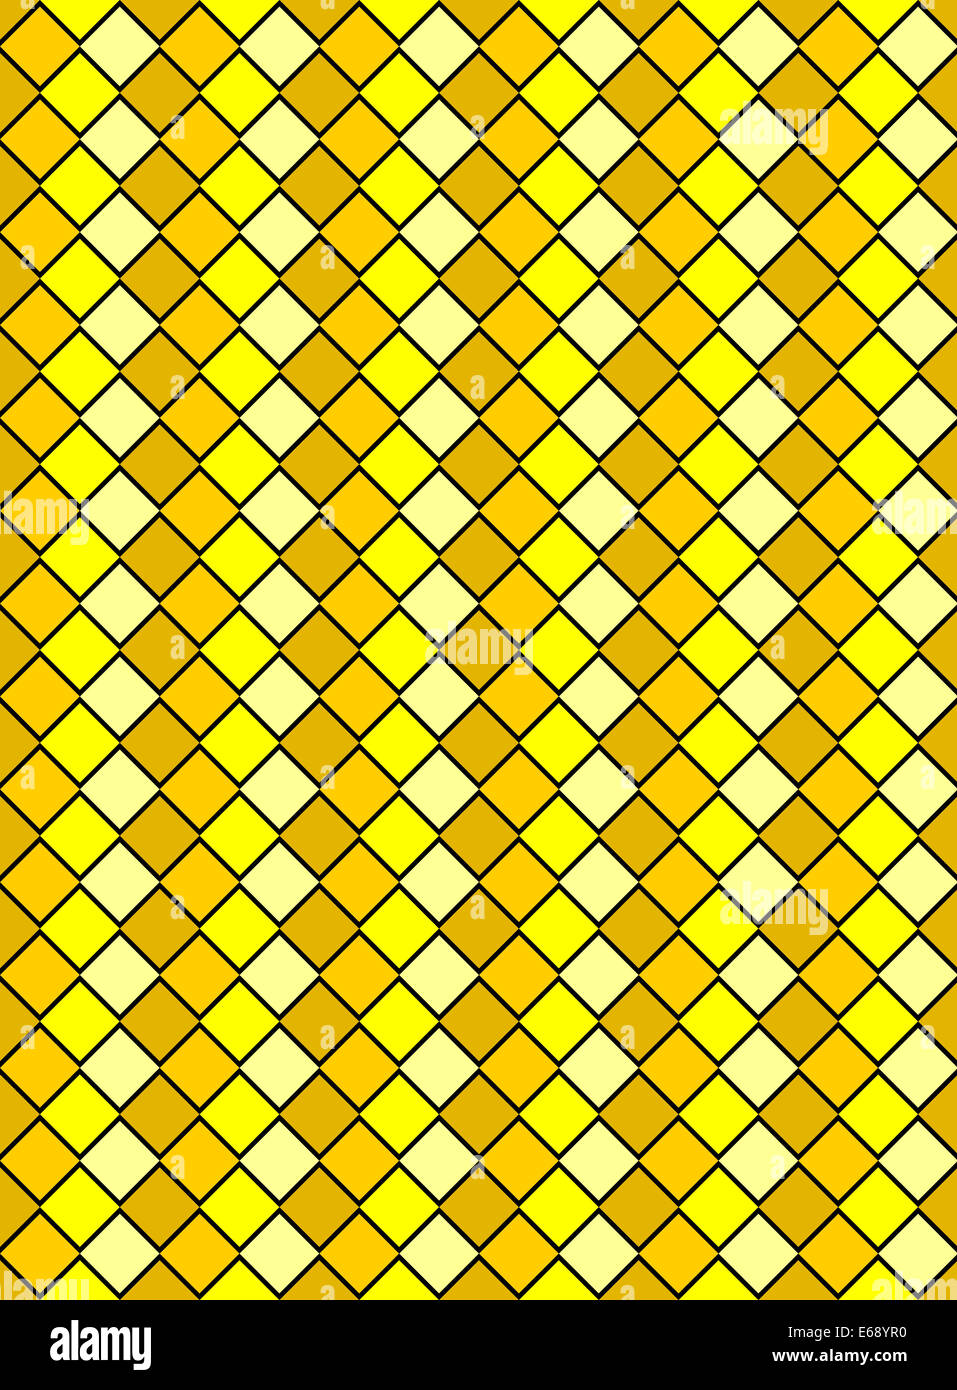 Yellow variegated diamond snake style wallpaper texture pattern. Stock Photo